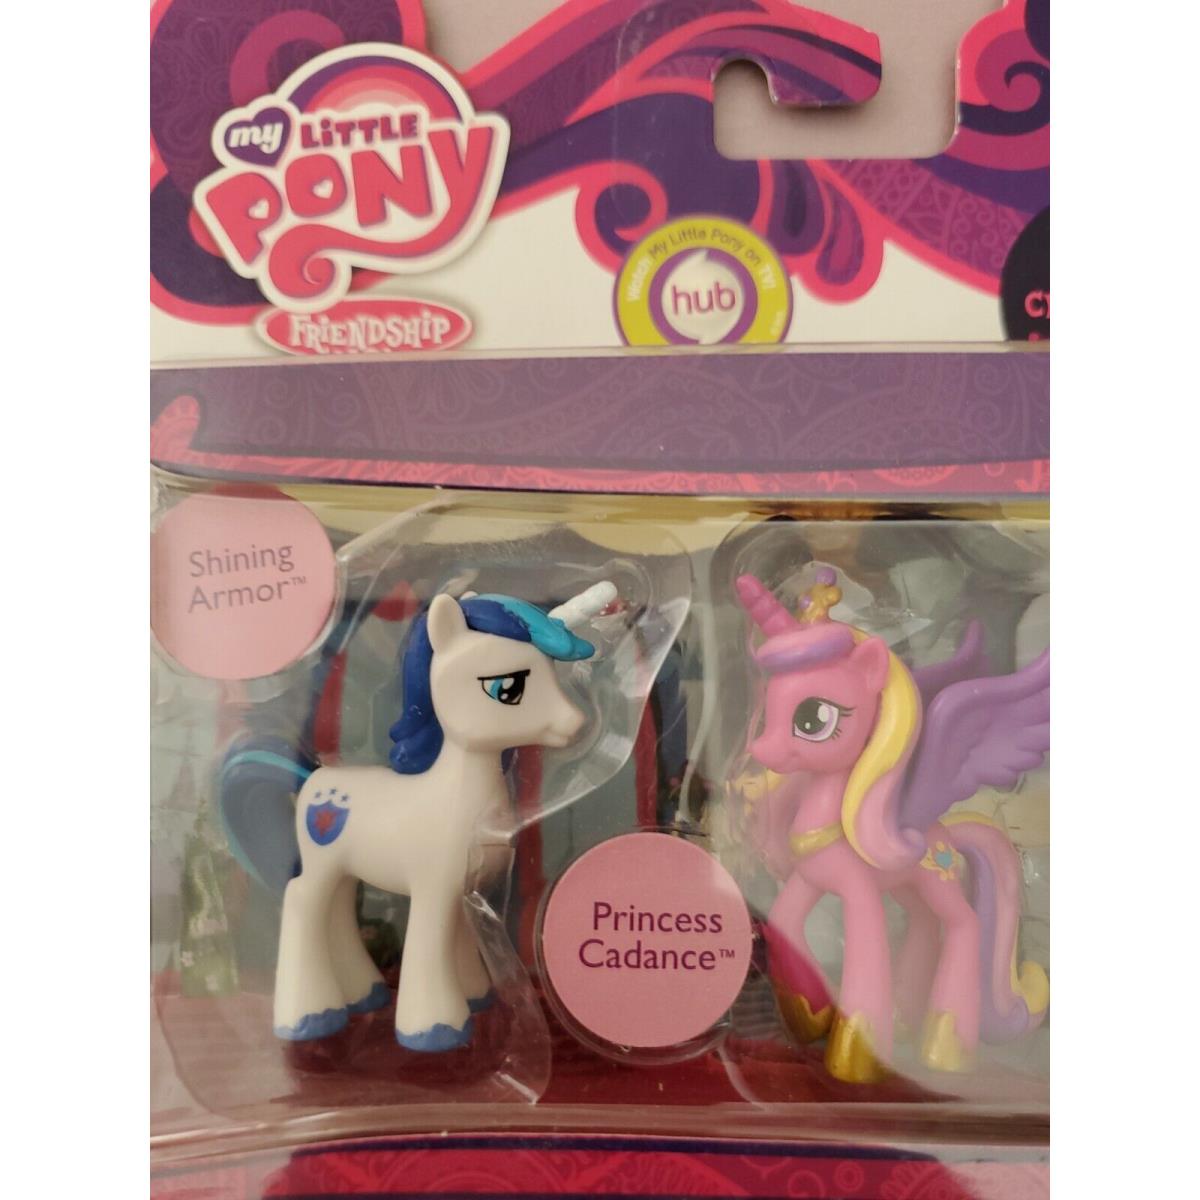 MY Little Pony Friendship IS Magic Pony Wedding Pvc Mlp Figure Set